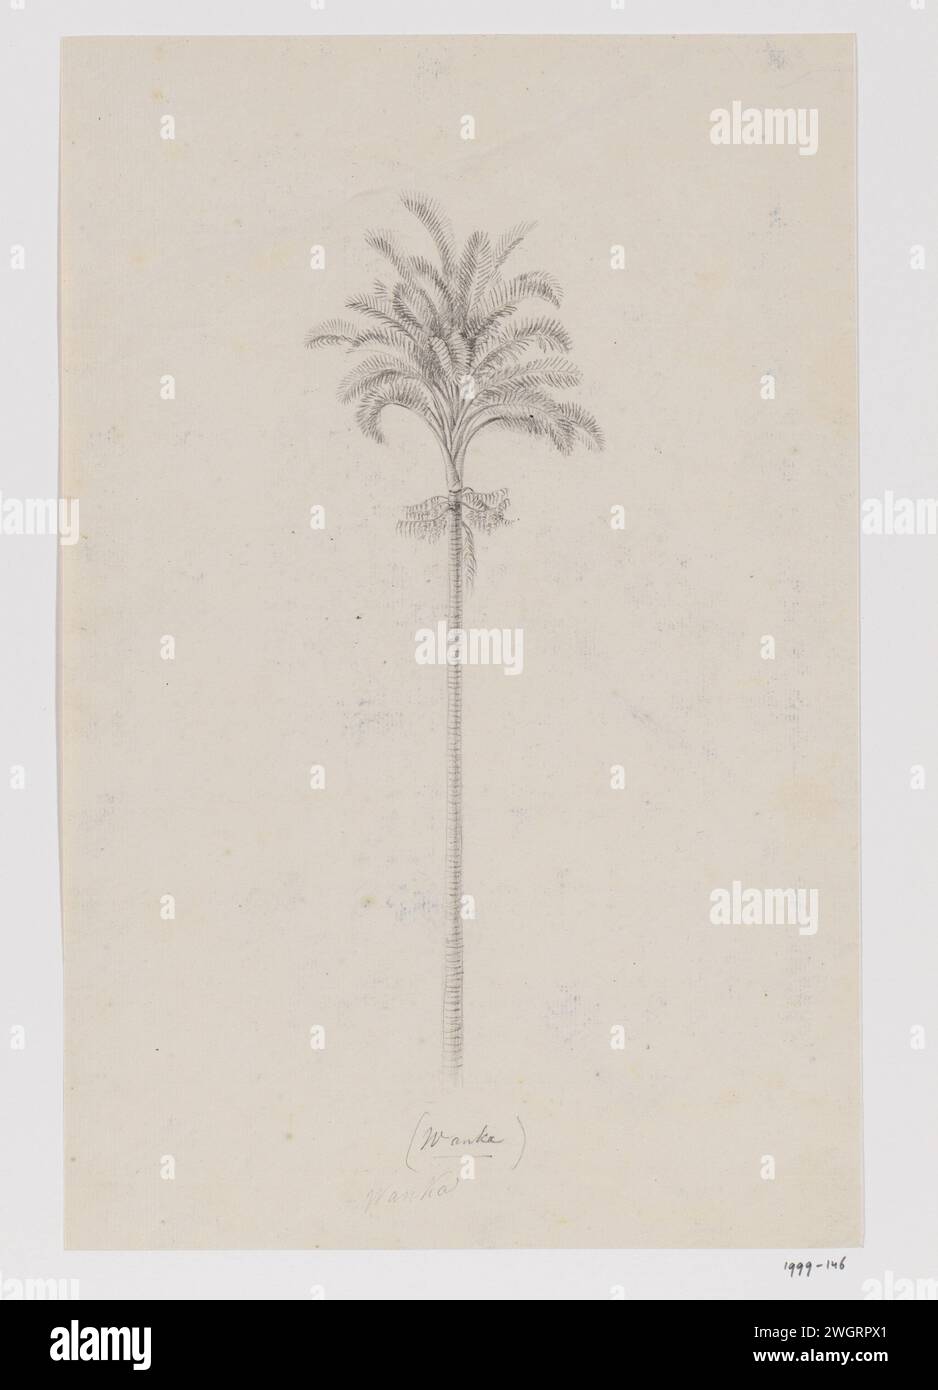 Sagopalm, Moluccas, Adrianus Johannes Bik, c. 1816 - c. 1846 drawing  Moluccas paper. chalk Stock Photo